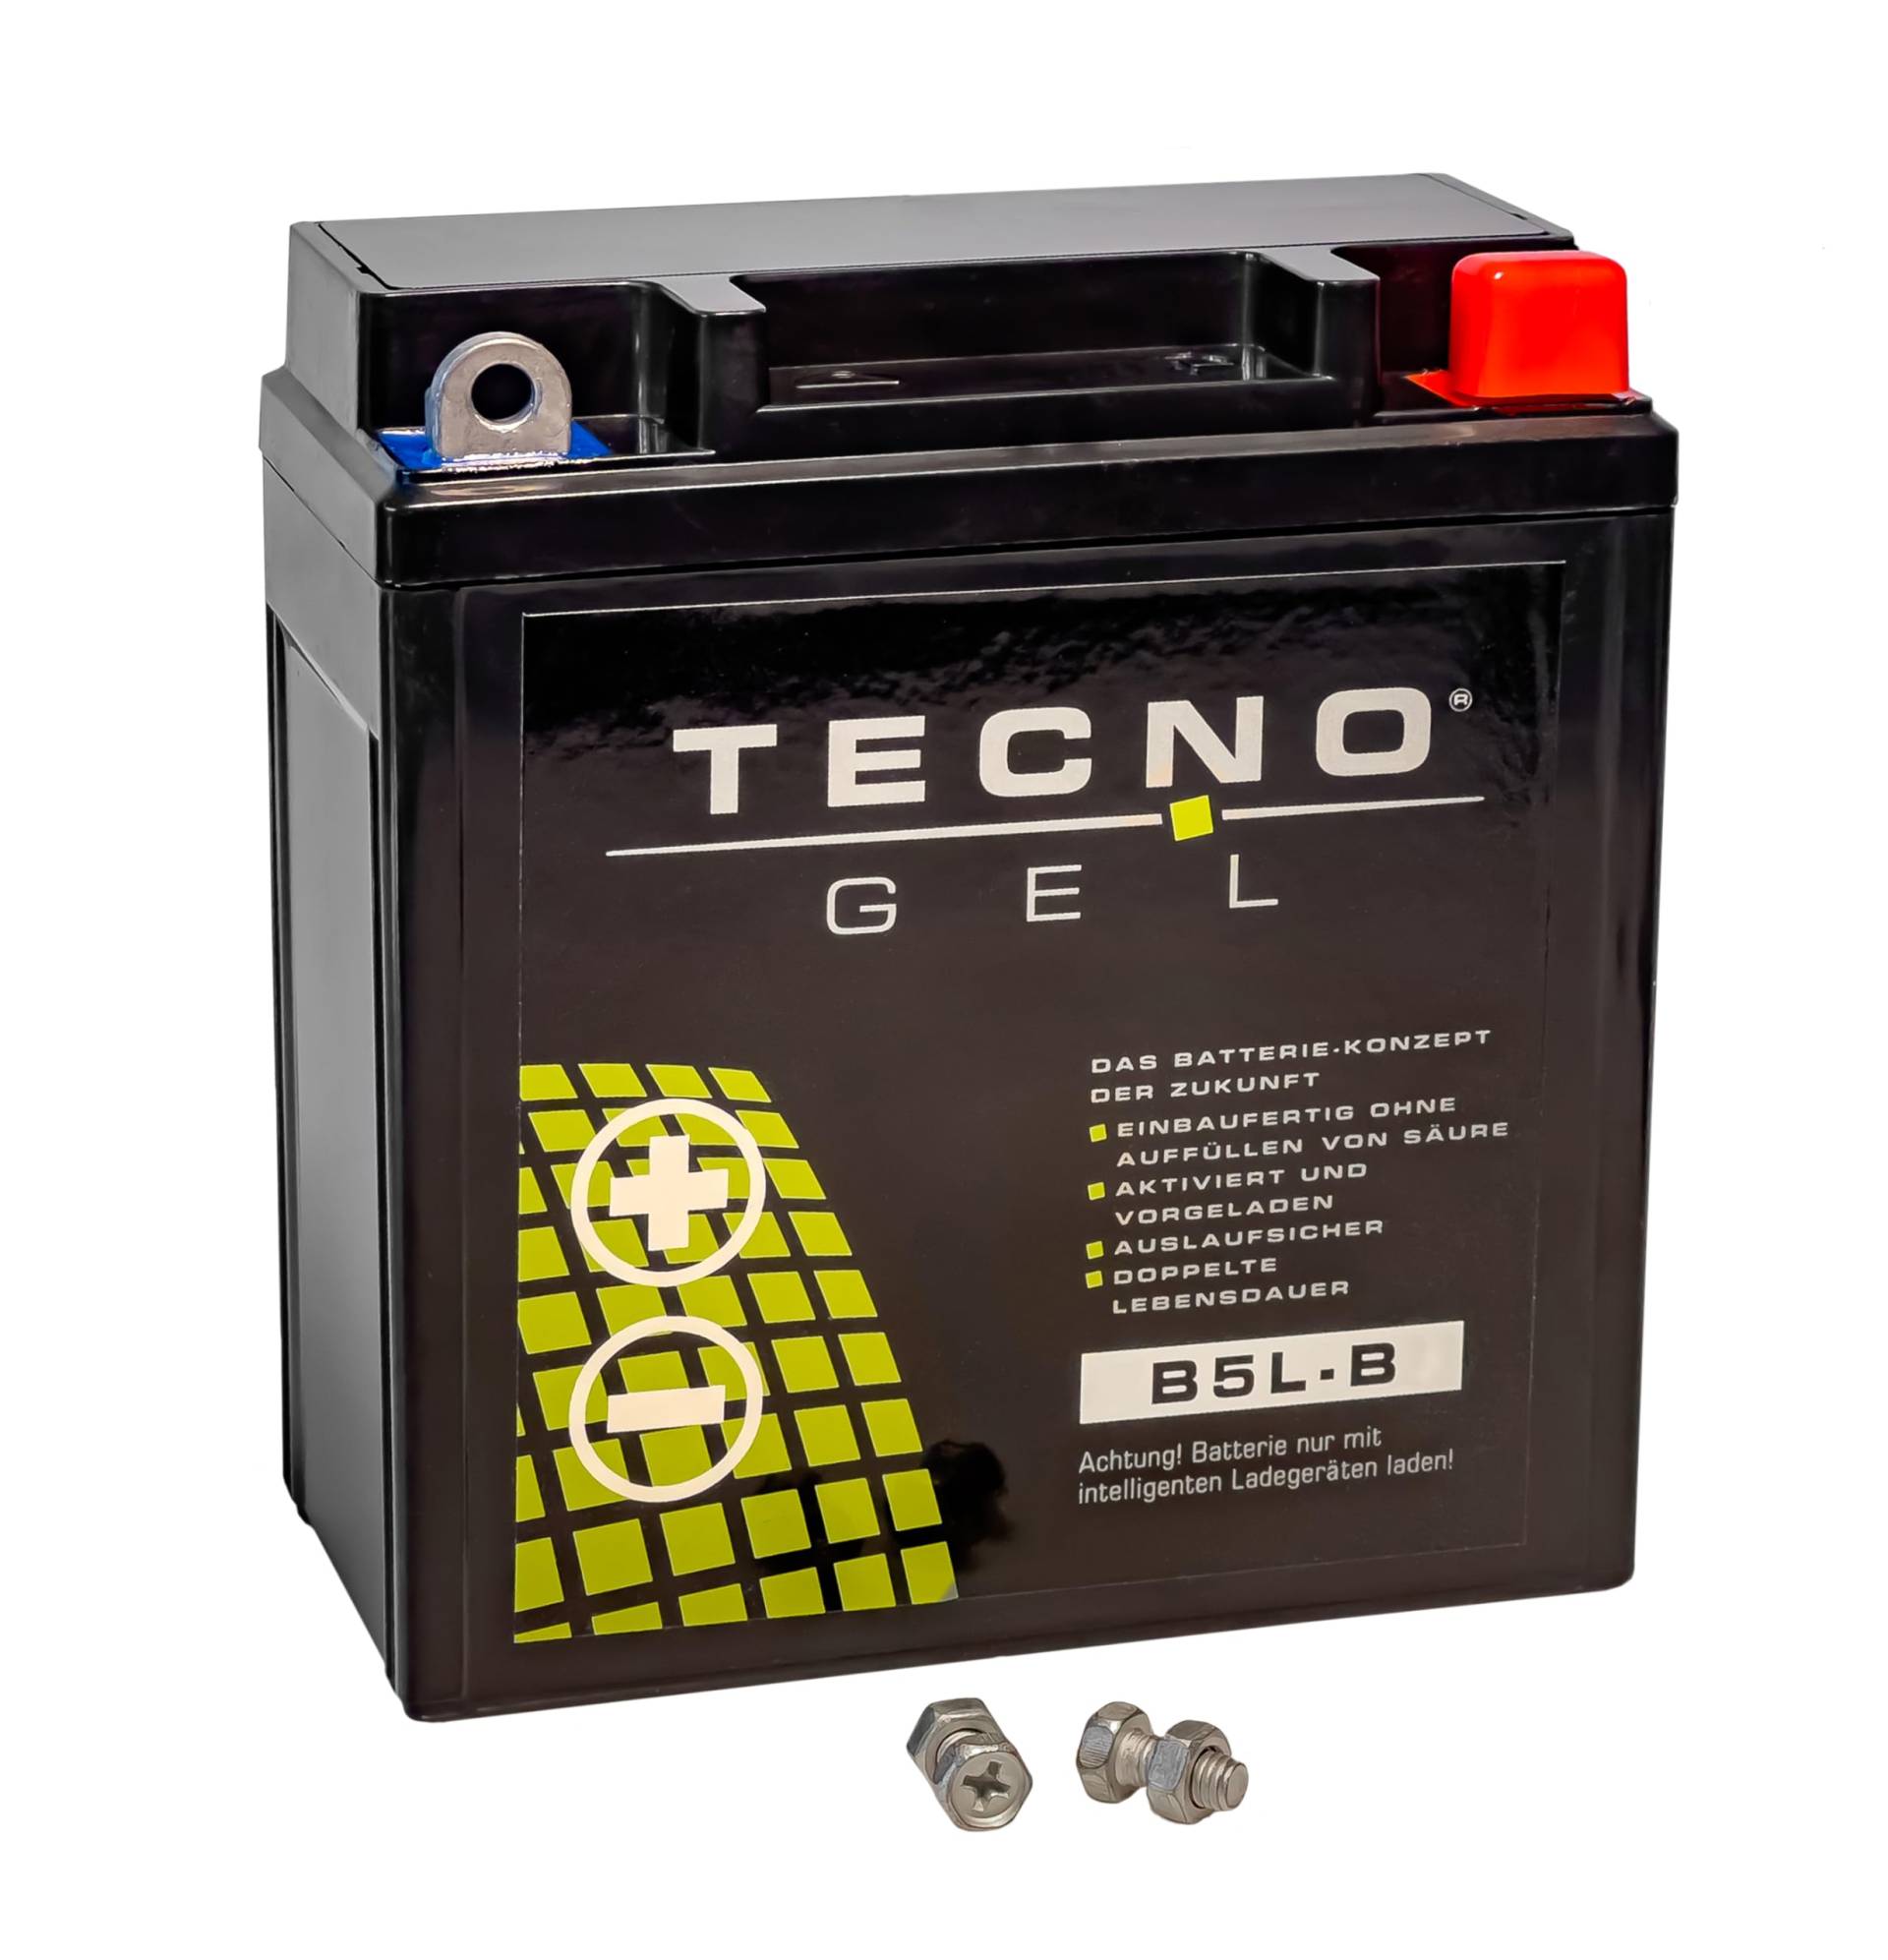 TECNO-GEL Motorrad-Batterie für YB5L-B, 12V Gel-Batterie 6 statt 5 Ah, CCA 100, 120x61x131 mm Pole - + von Wirth-Federn